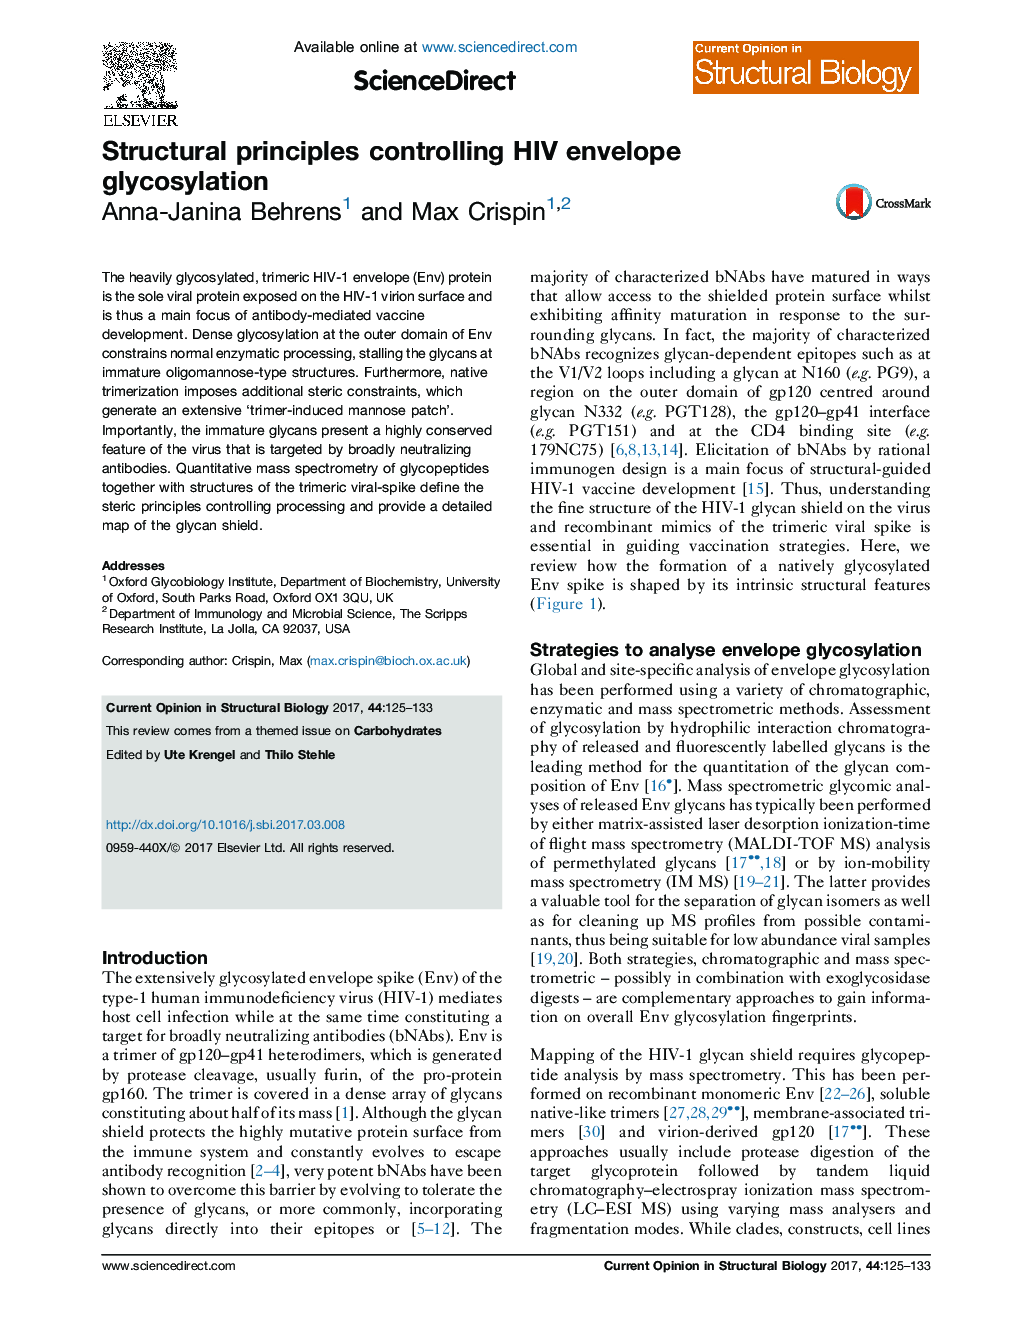 Structural principles controlling HIV envelope glycosylation